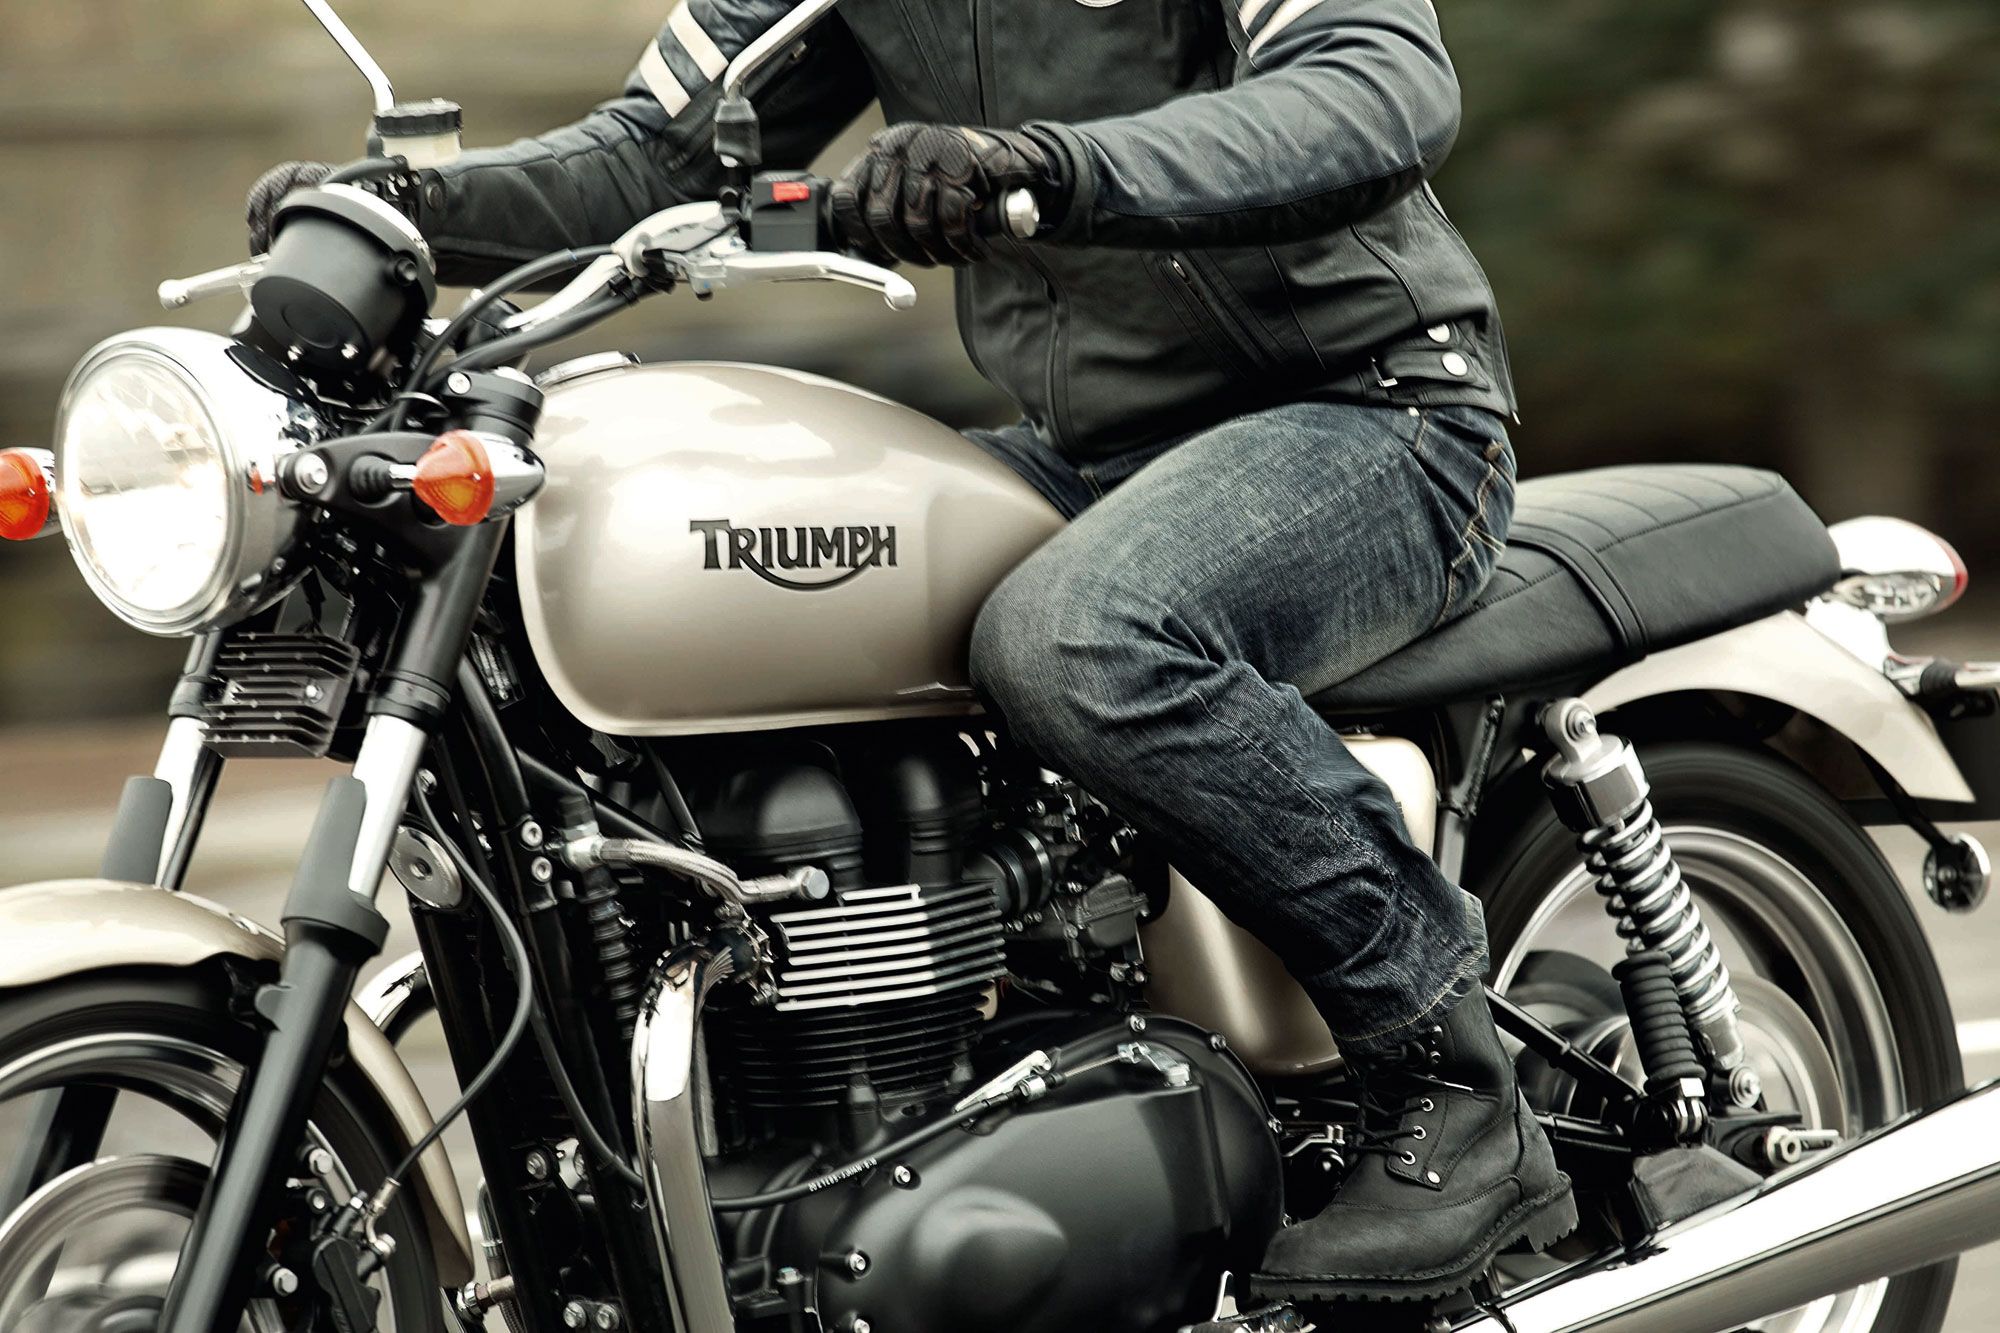 HD Triumph Motorcycle Wallpaper and Photo. HD Motocycles Wallpaper